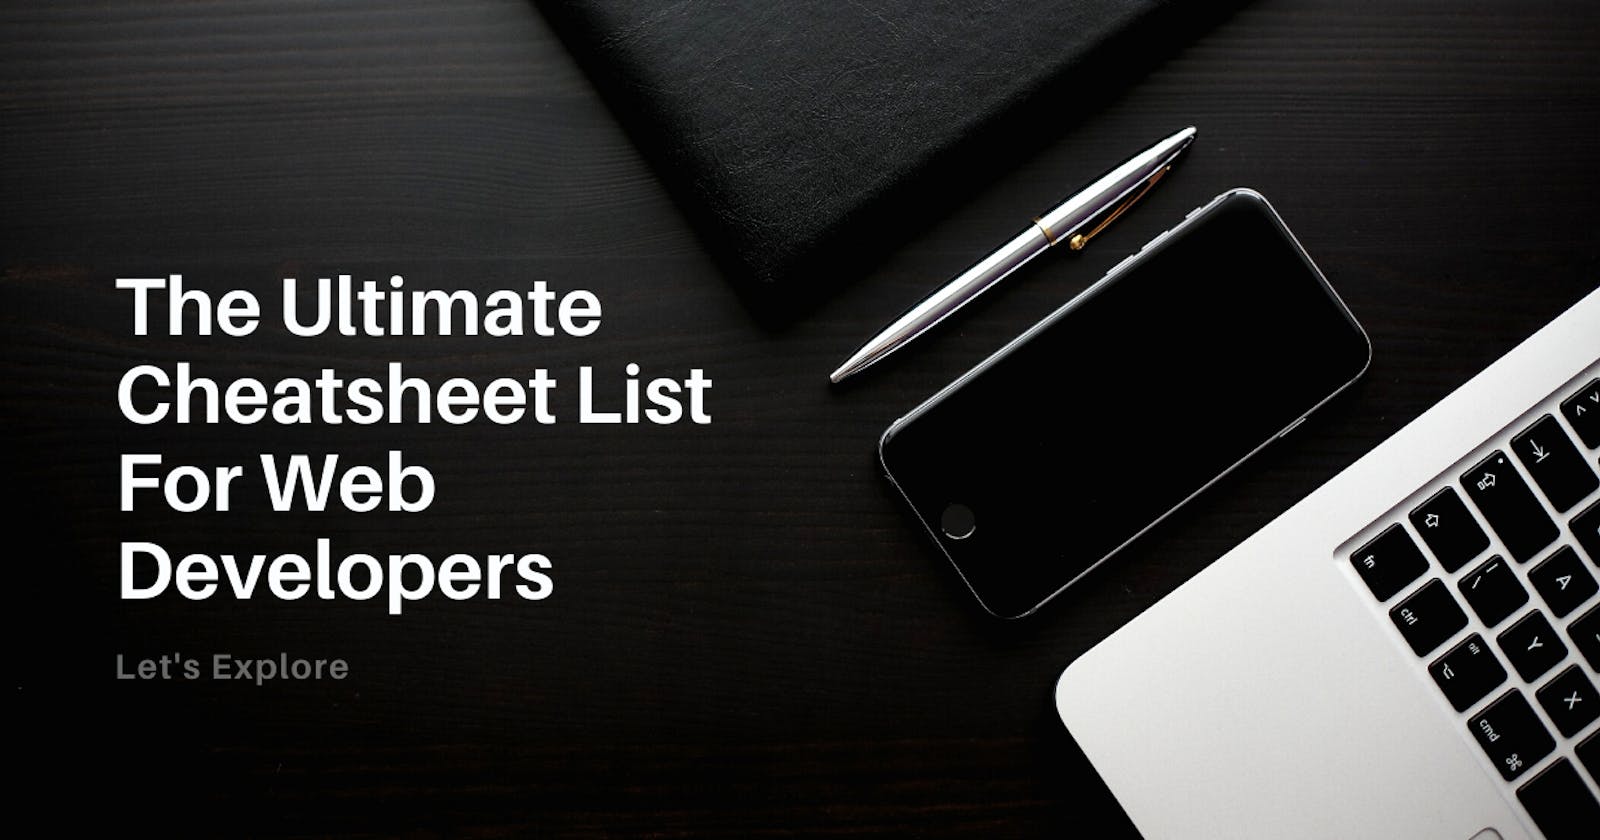 The Ultimate Cheatsheet List For Web Developers